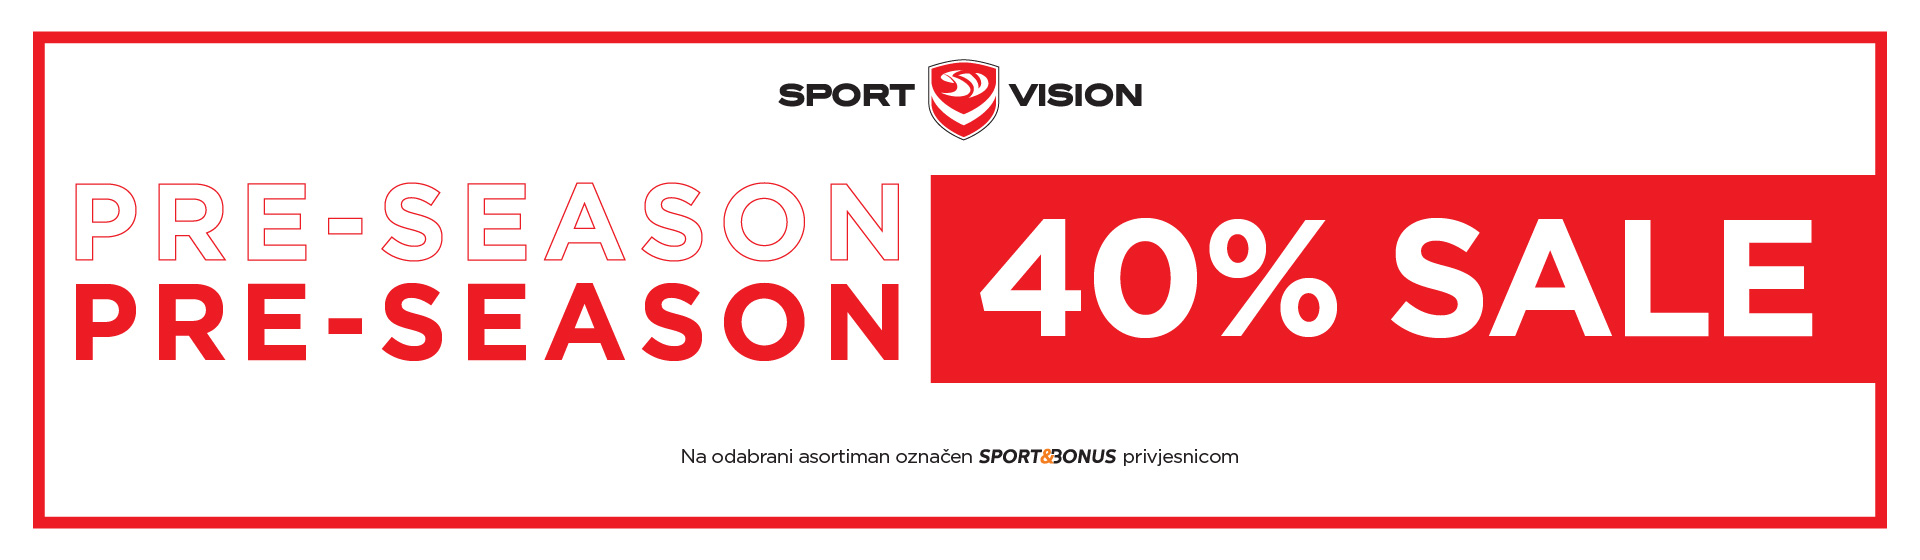 Predsezonsko sniženje u Sport Vision trgovinama i online!